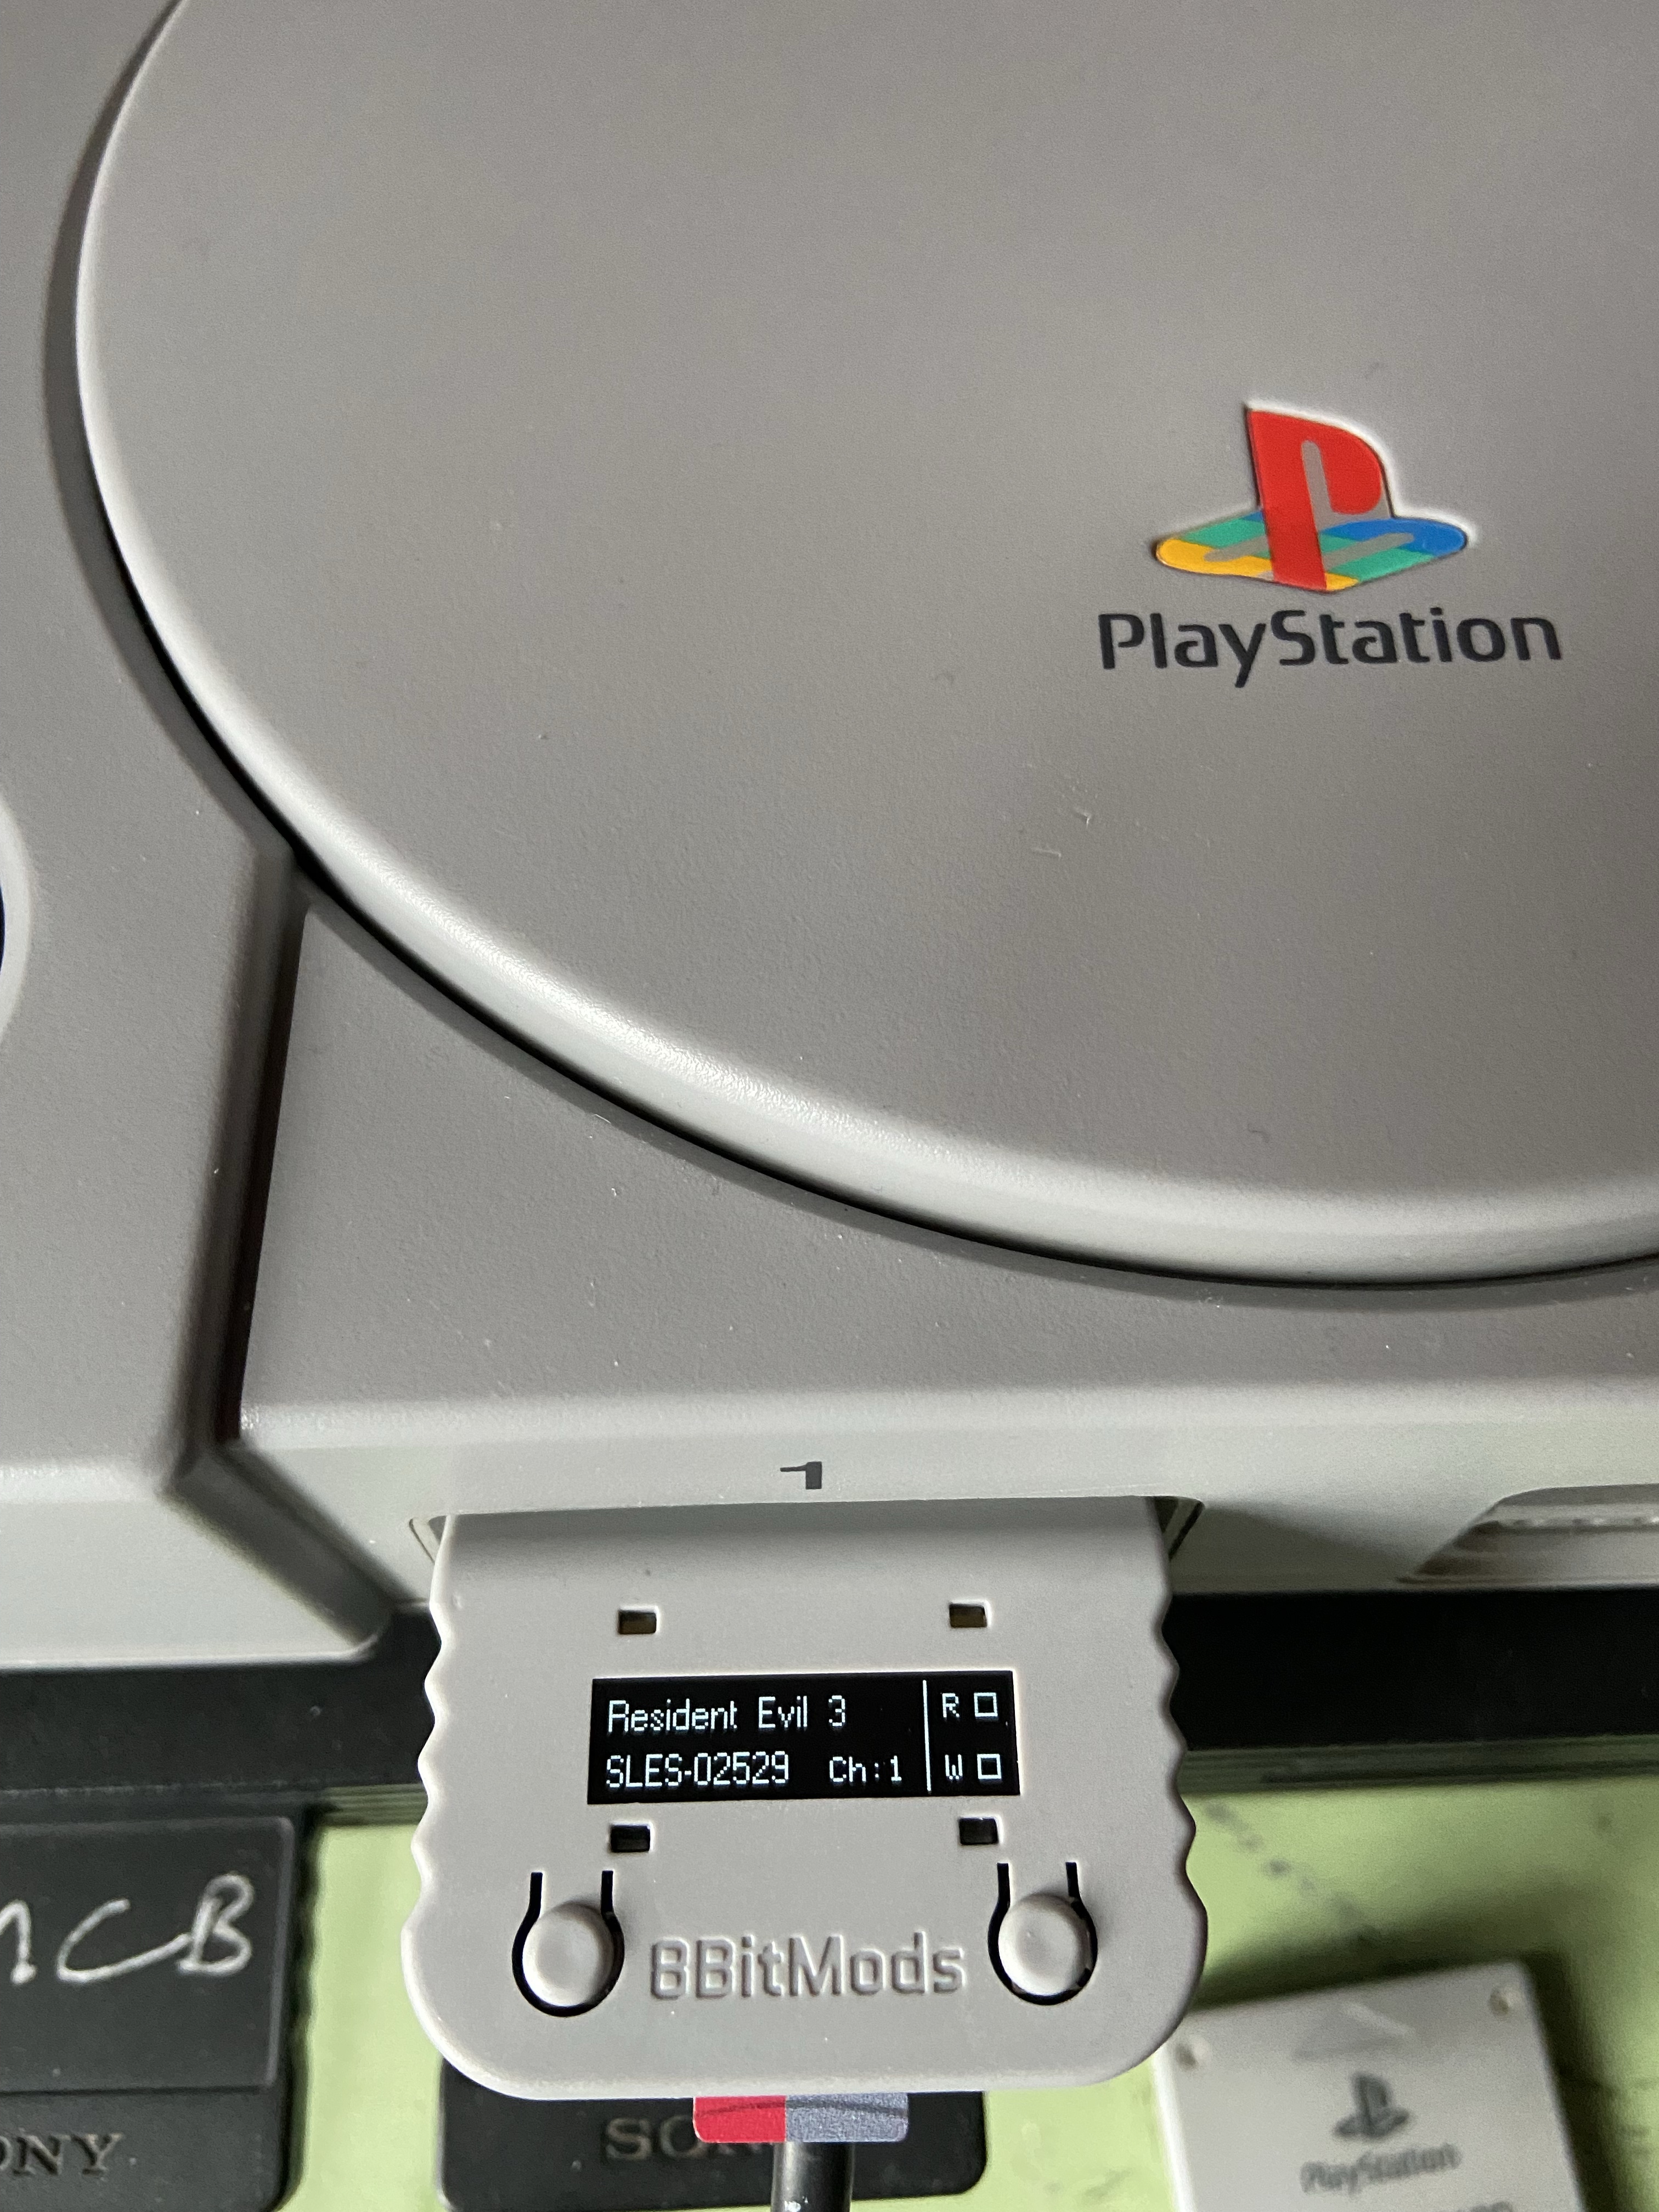 MemCard PRO aftermarket PlayStation memory card working with xStation ODEwith xStation ODE